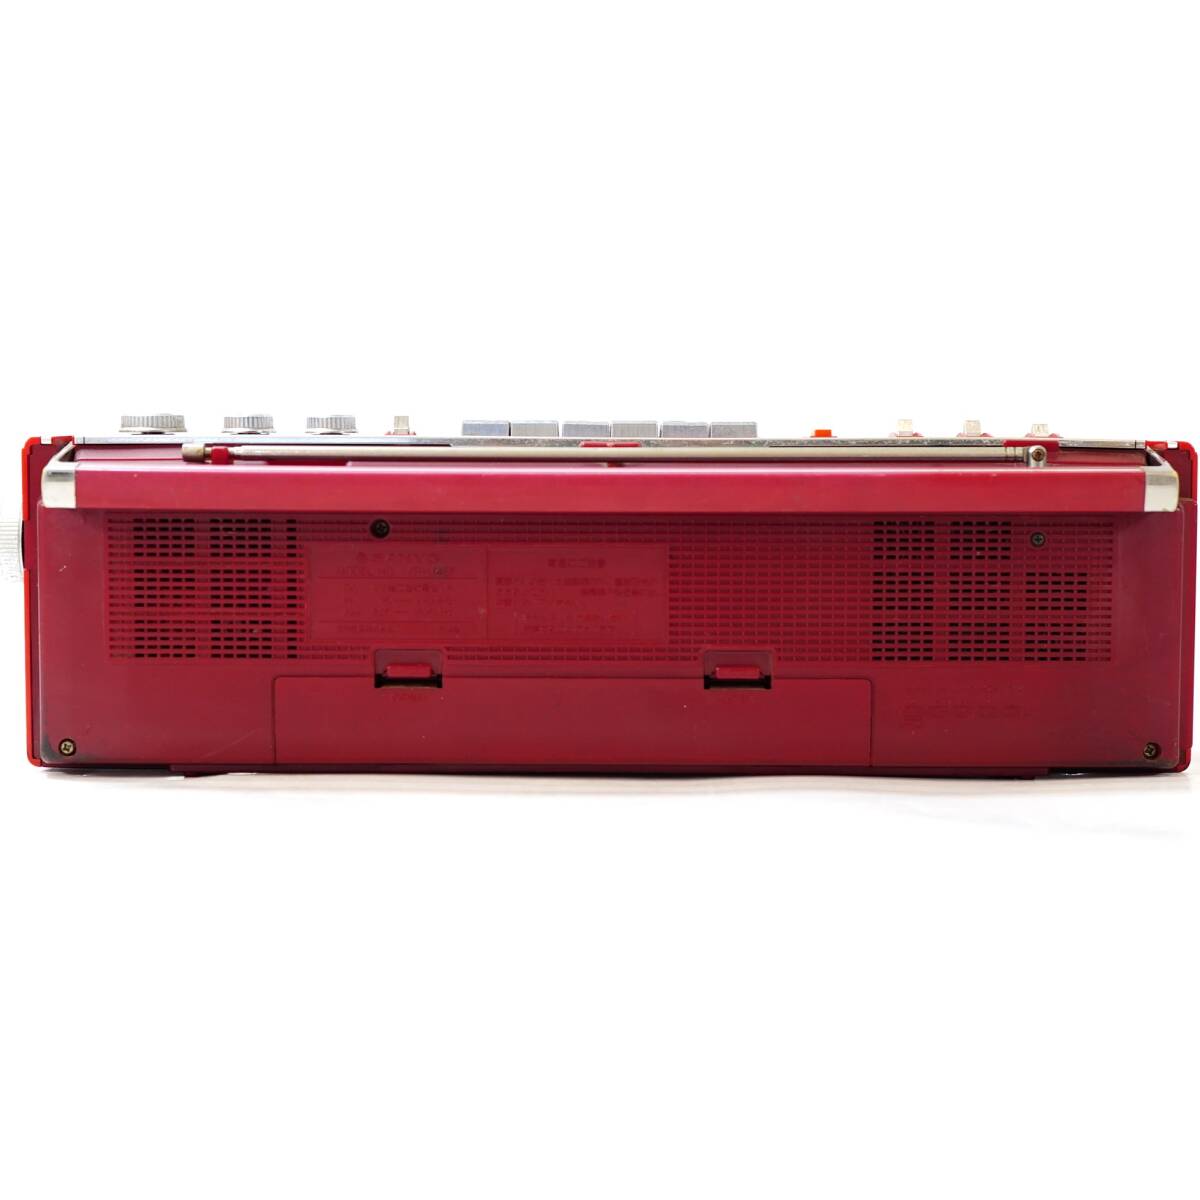 NA4852 ラジオ受信〇 テープ再生× 簡易クリーニング済 SANYO サンヨー 小型ラジカセ 赤 レッド MR-U4SF 昭和レトロ レトロ 検S_画像8